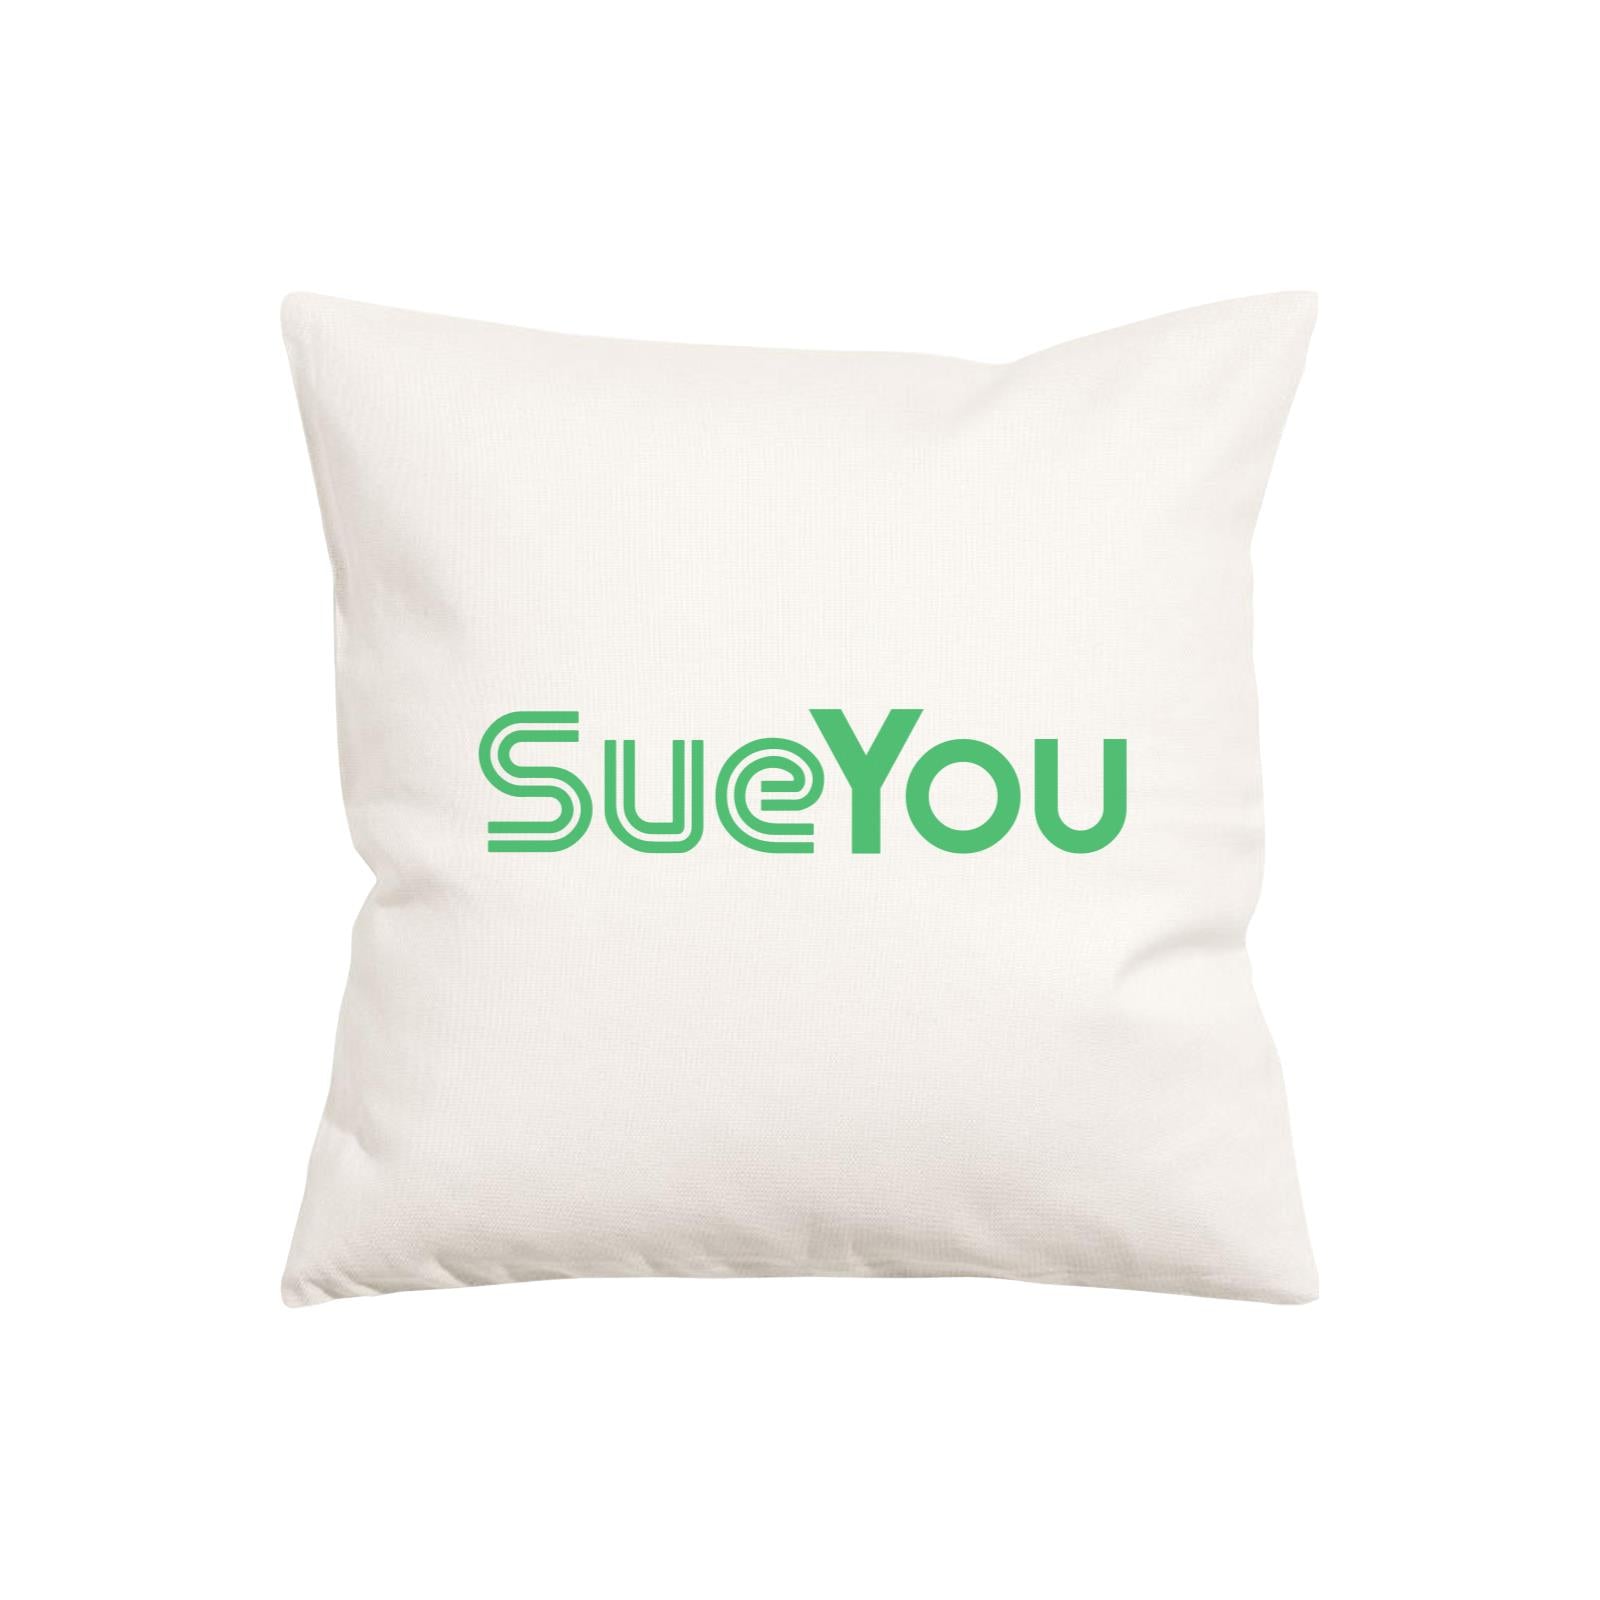 Slang Statement SueYou Pillow Cushion